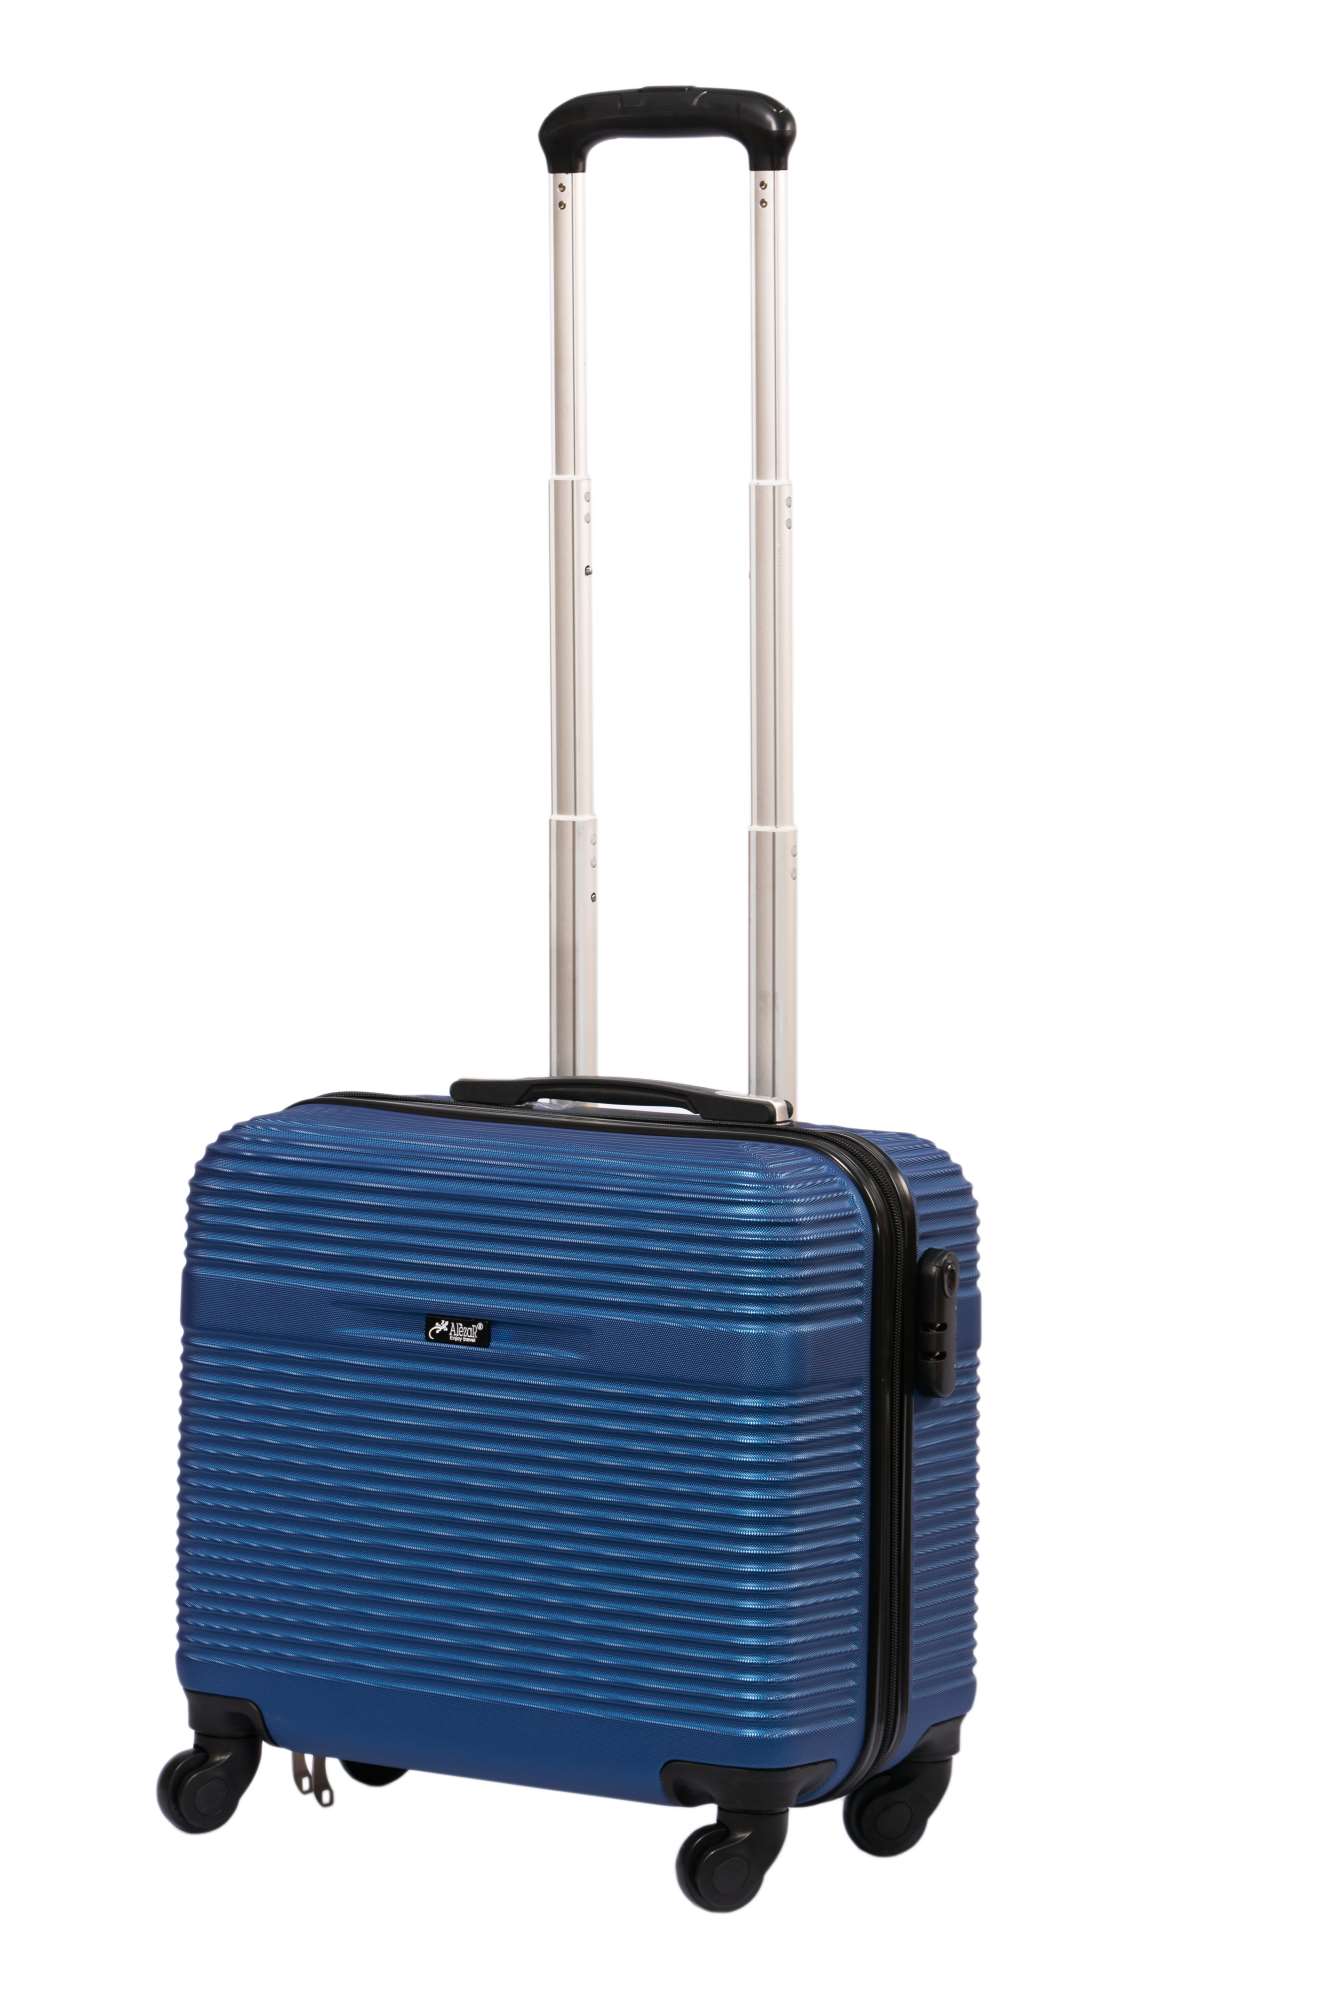 Alezar Cabin Size Travel Bag Blue 18"